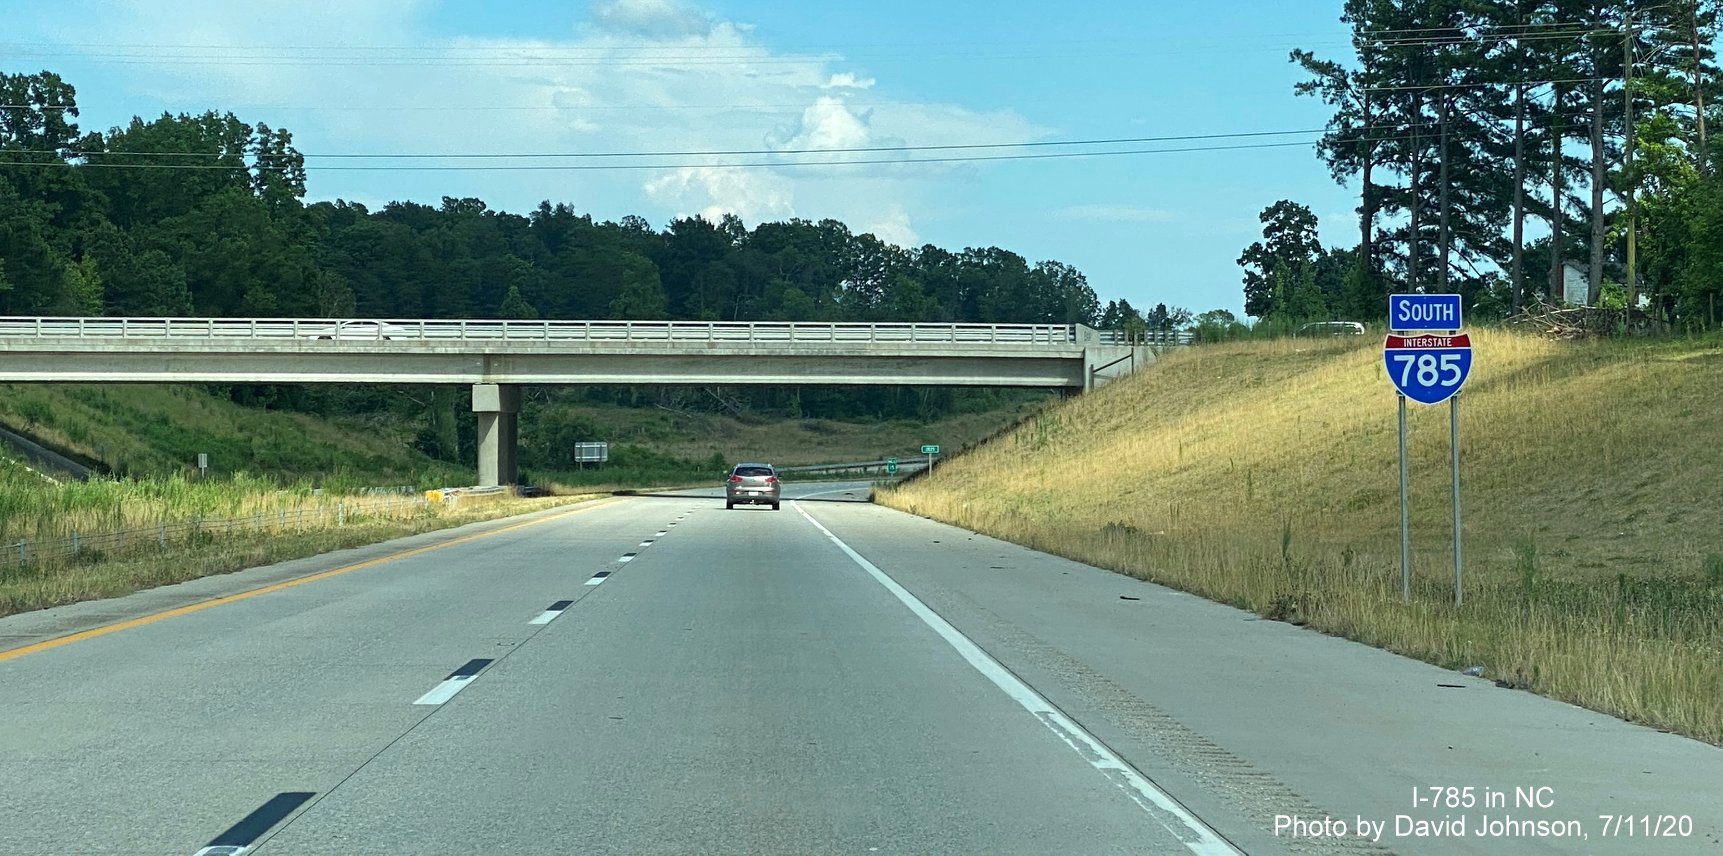 First South I-785 reassurance marker following US 29 interchange, by David Johnson, July 2020